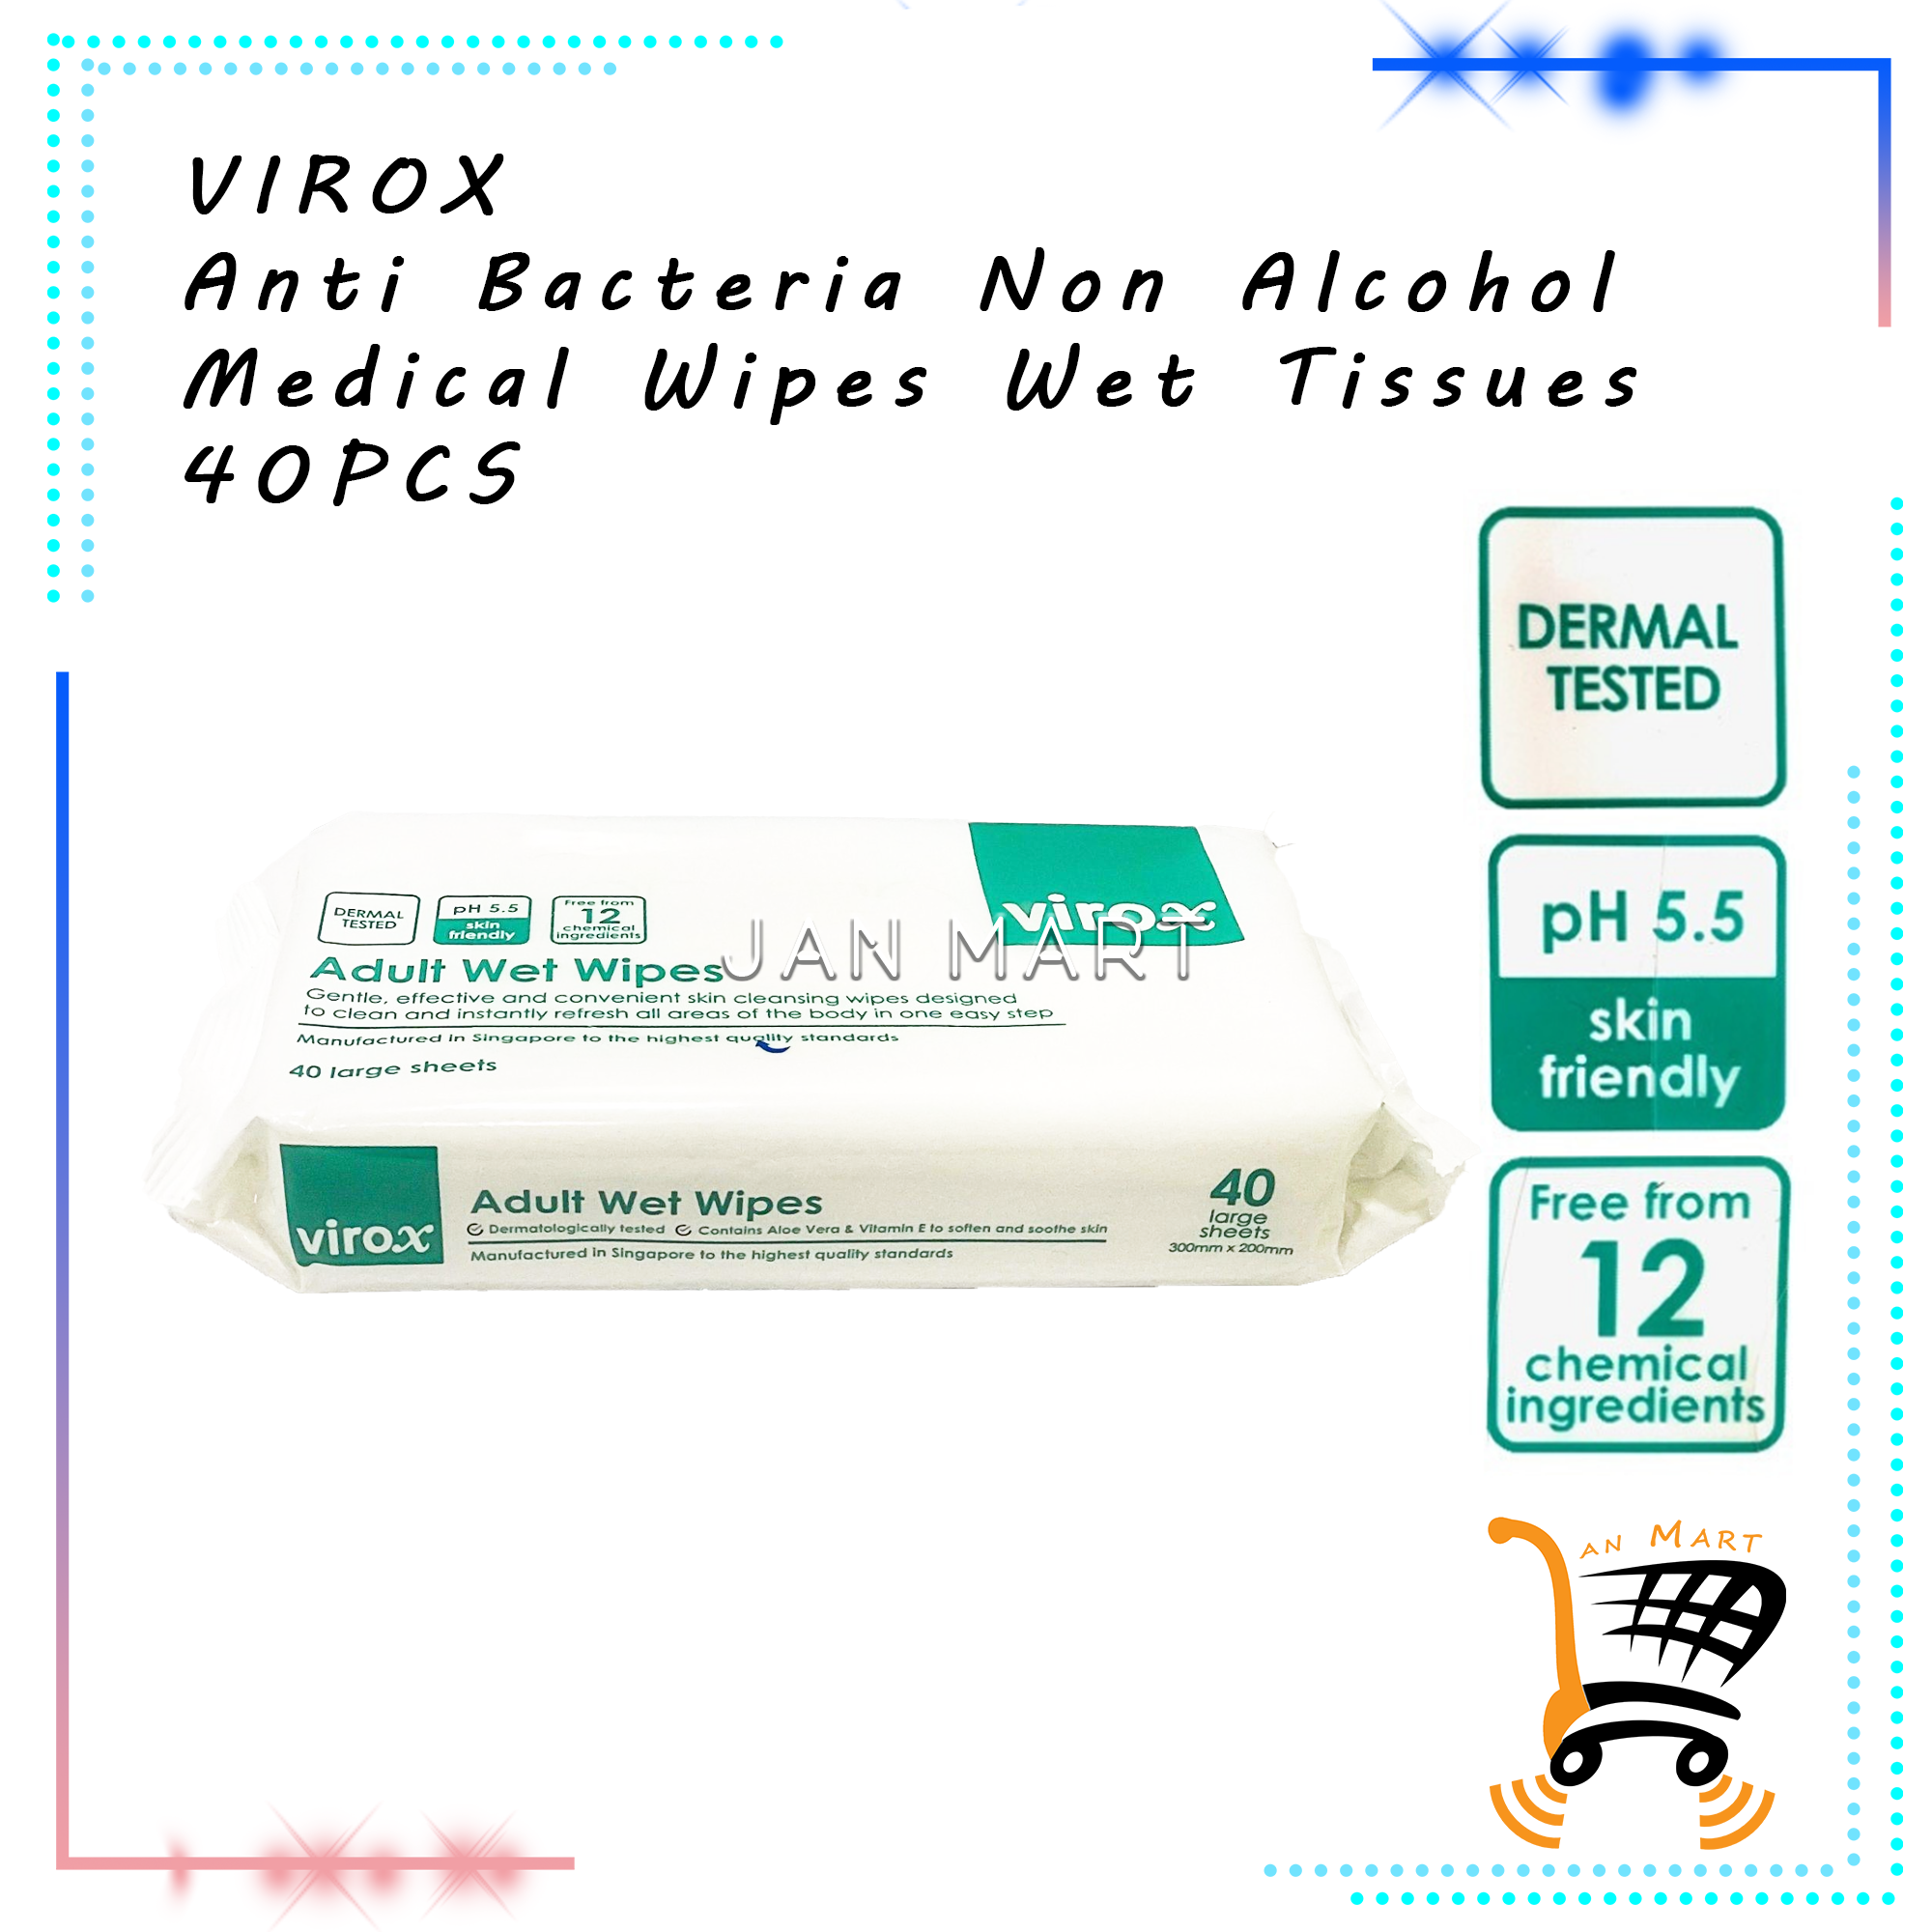 VIROX Anti Bacteria Non Alcohol Medical Wipes Wet Tissues 40PCS